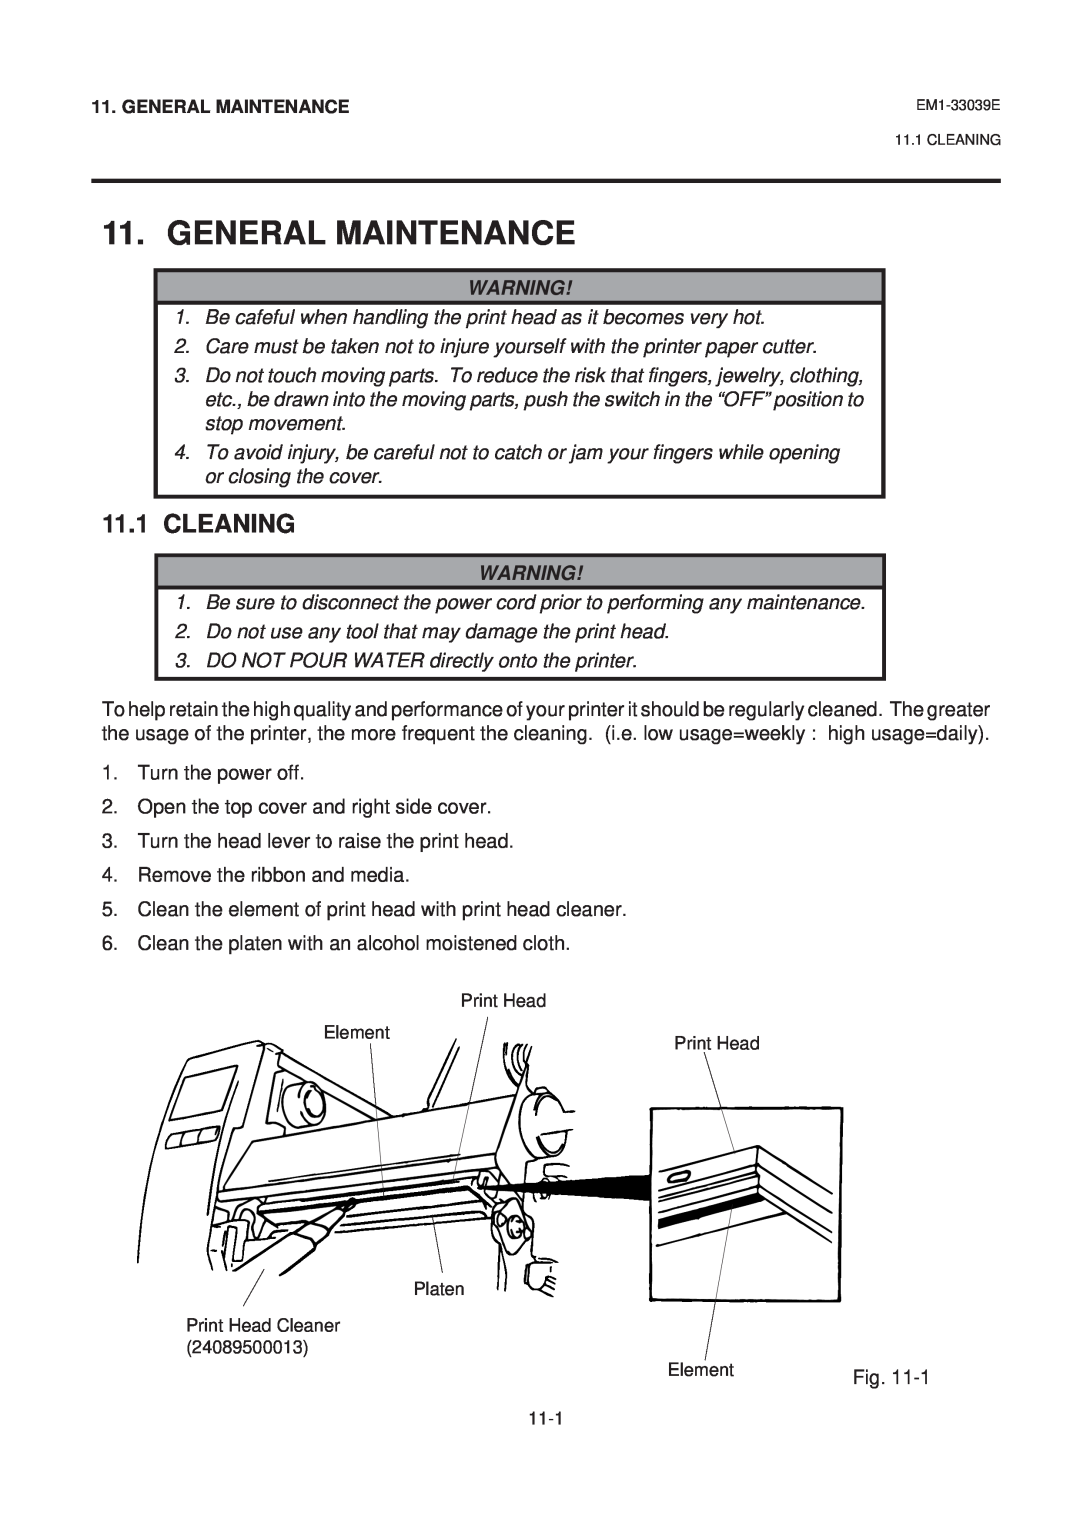 Toshiba B-870 SERIES, EM1-33039EE owner manual General Maintenance, Cleaning 